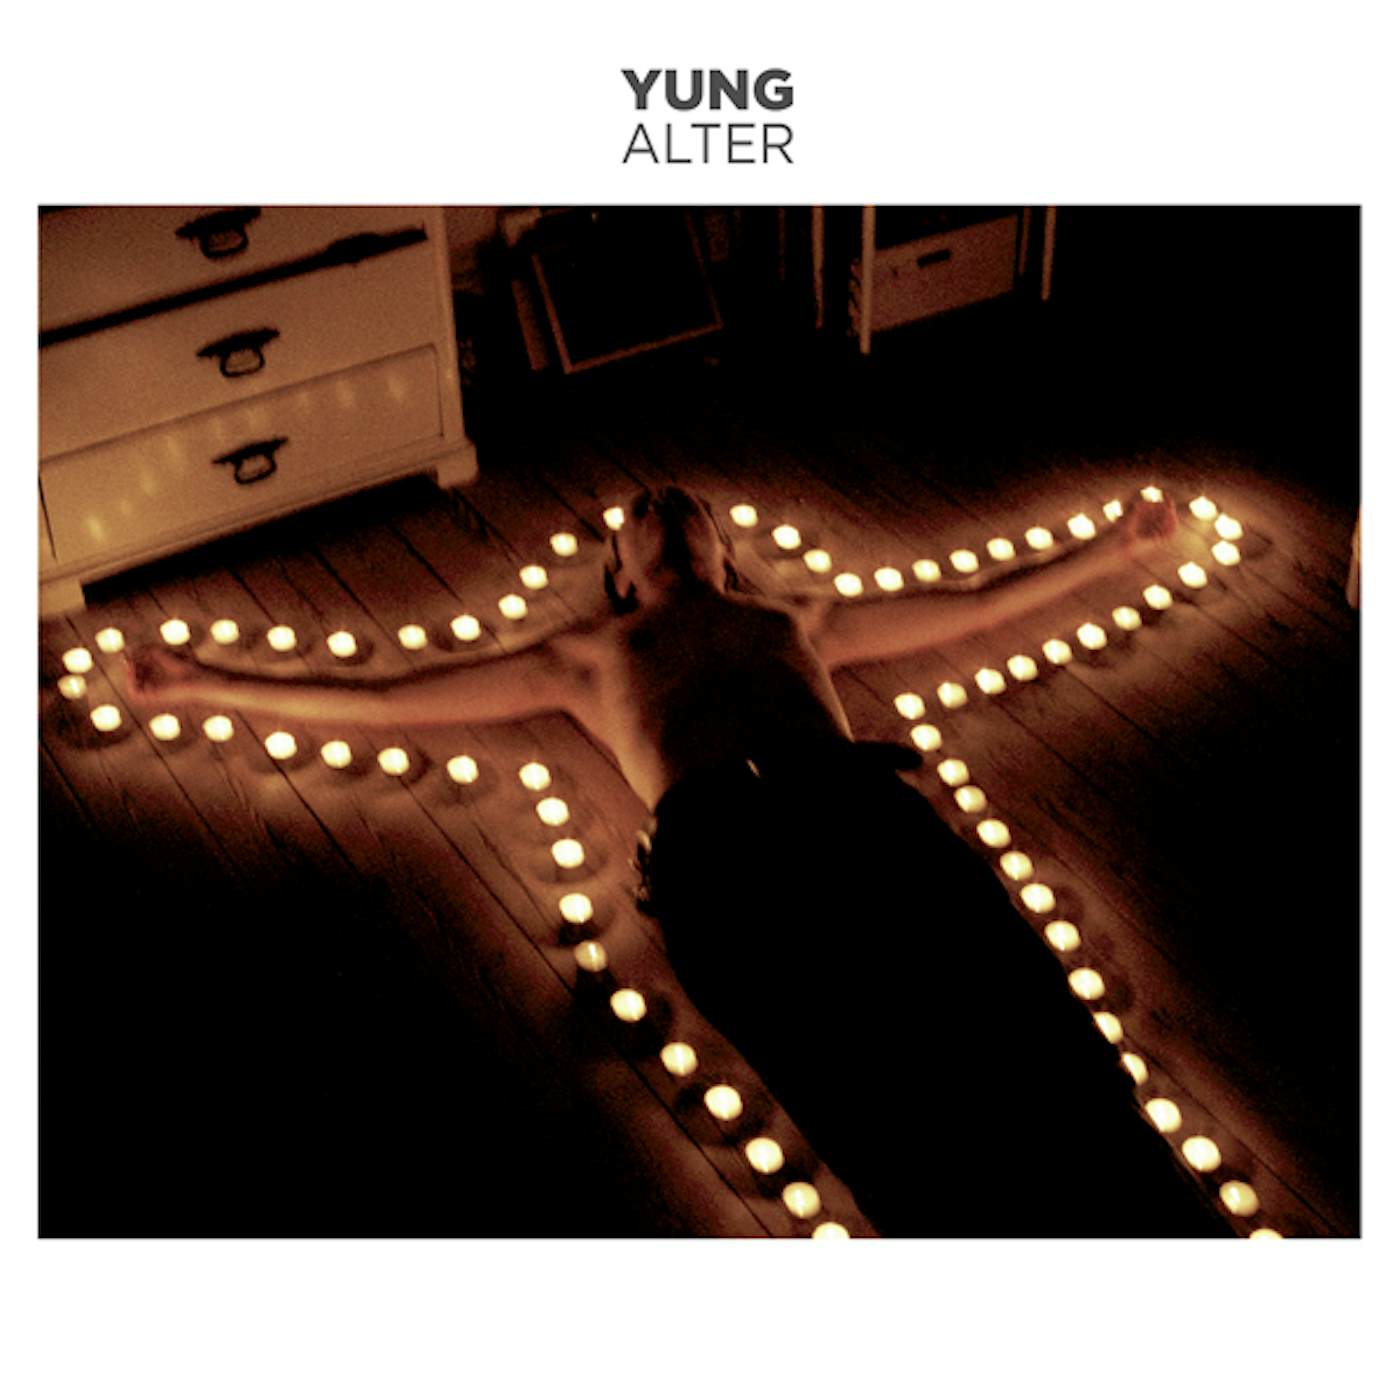 Yung Alter Vinyl Record